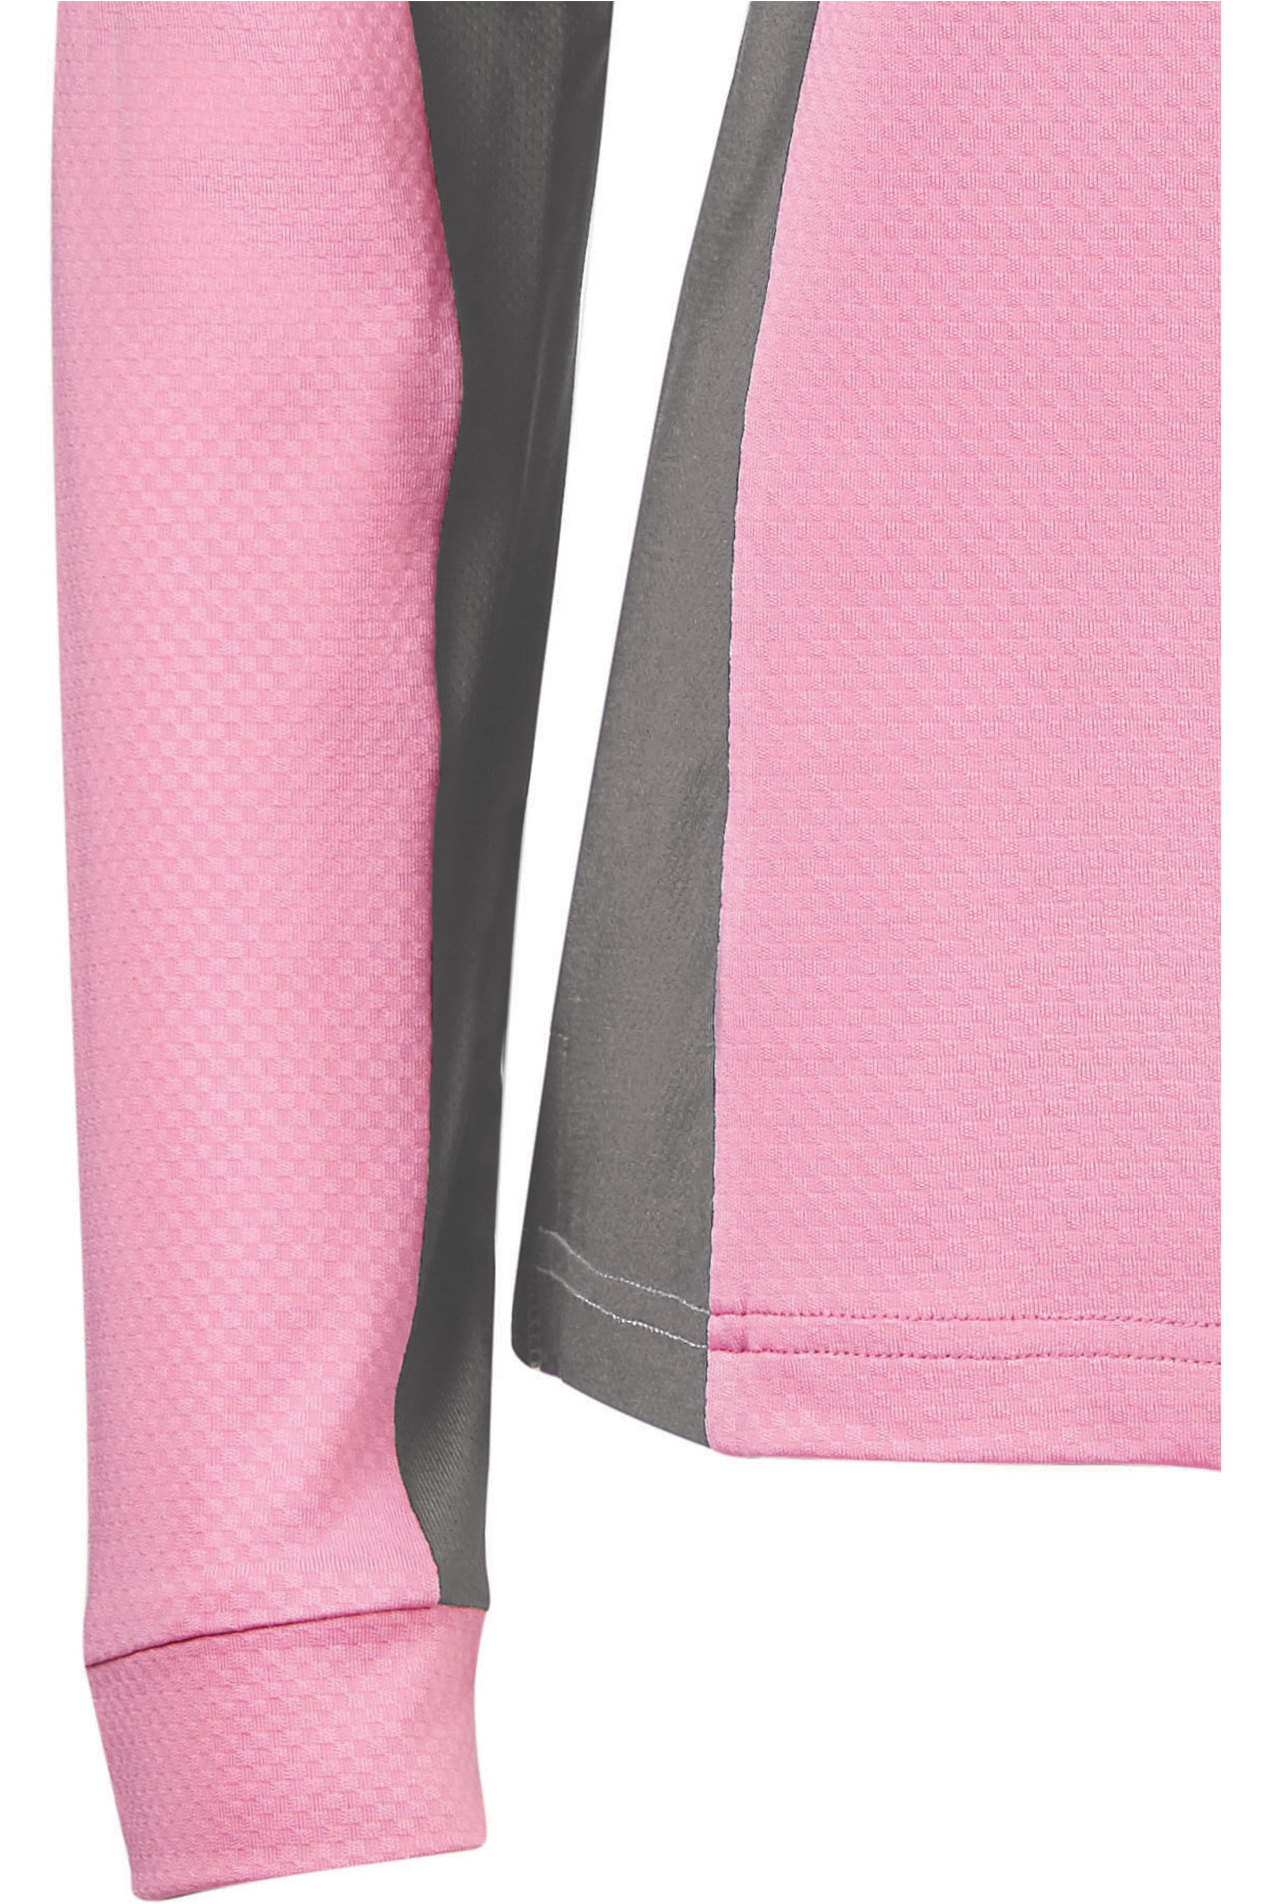 Long Sleeve Tech Top Riding Shirt Fuchsia Pink, X-Large CDT Dublin Airflow Comfort Dry